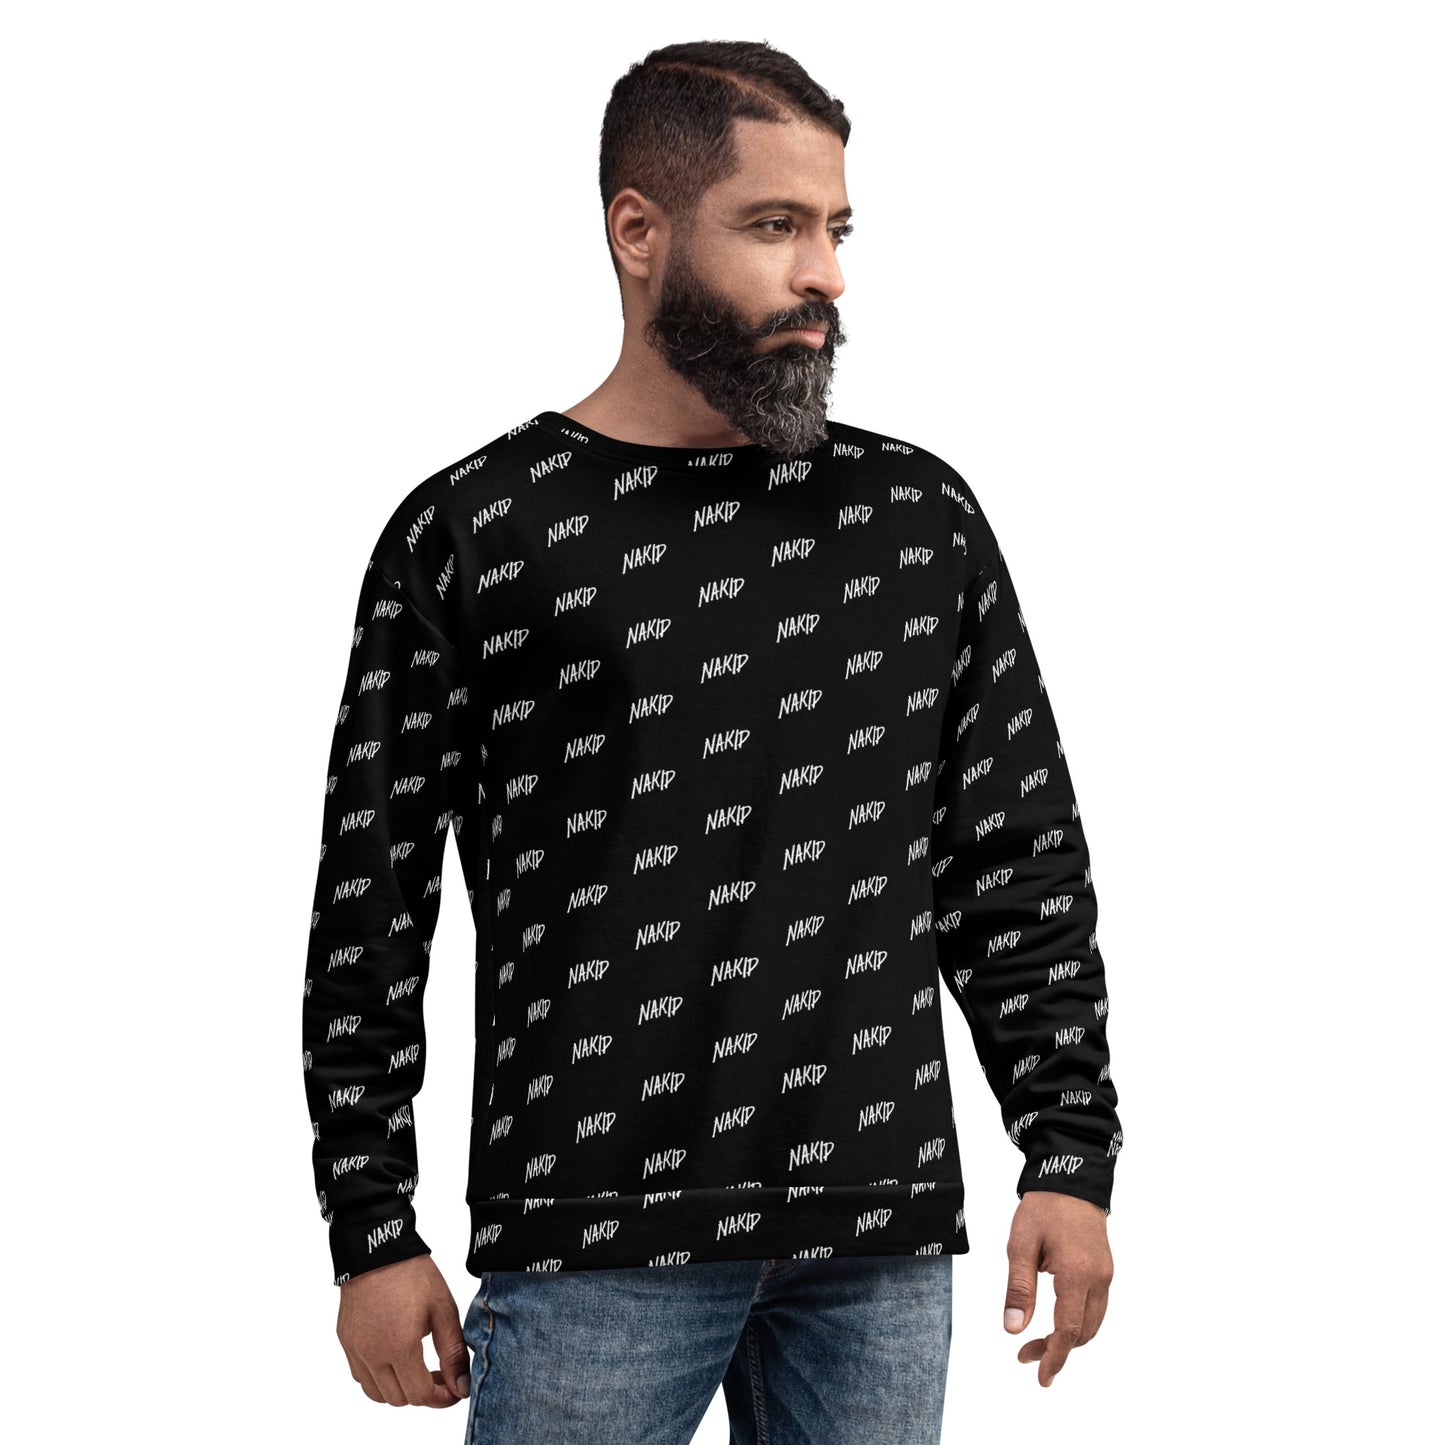 “NAKID" ALL OVER - The Rebel's Unisex Sweatshirt